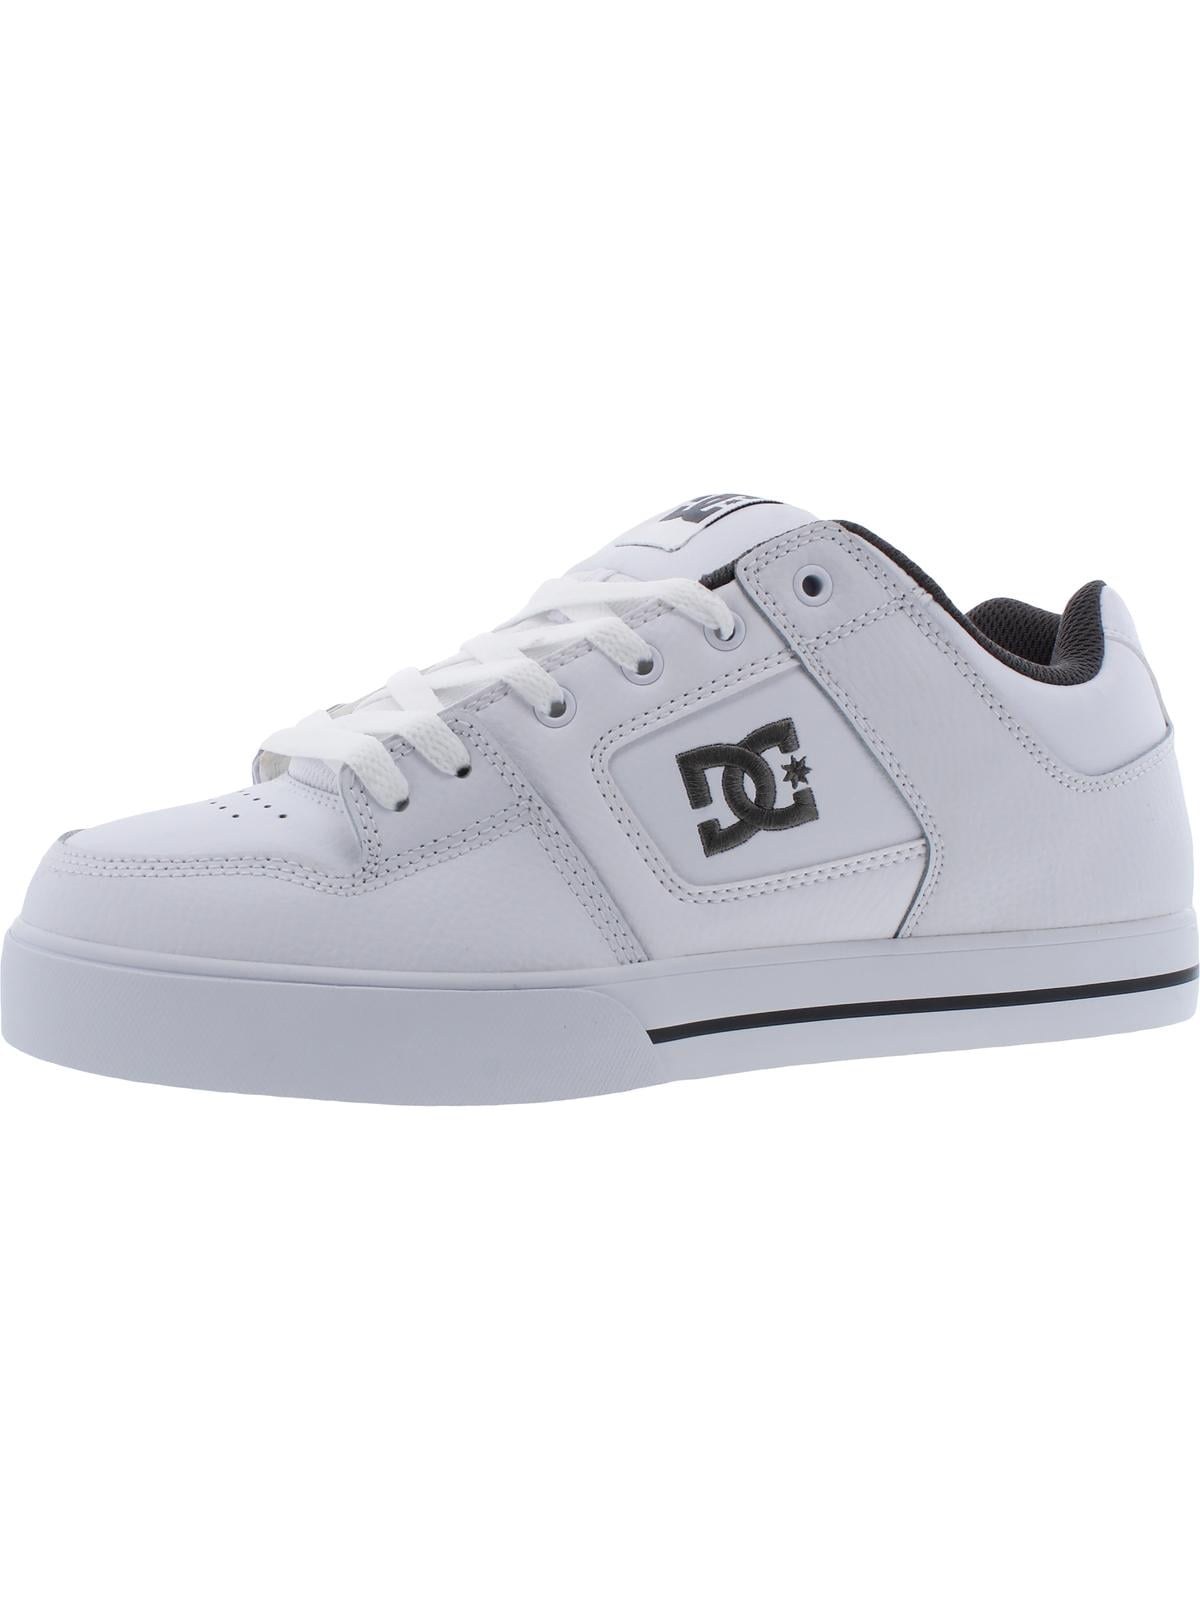 DC Shoes Mens Low-Top Sneakers Skate Shoe